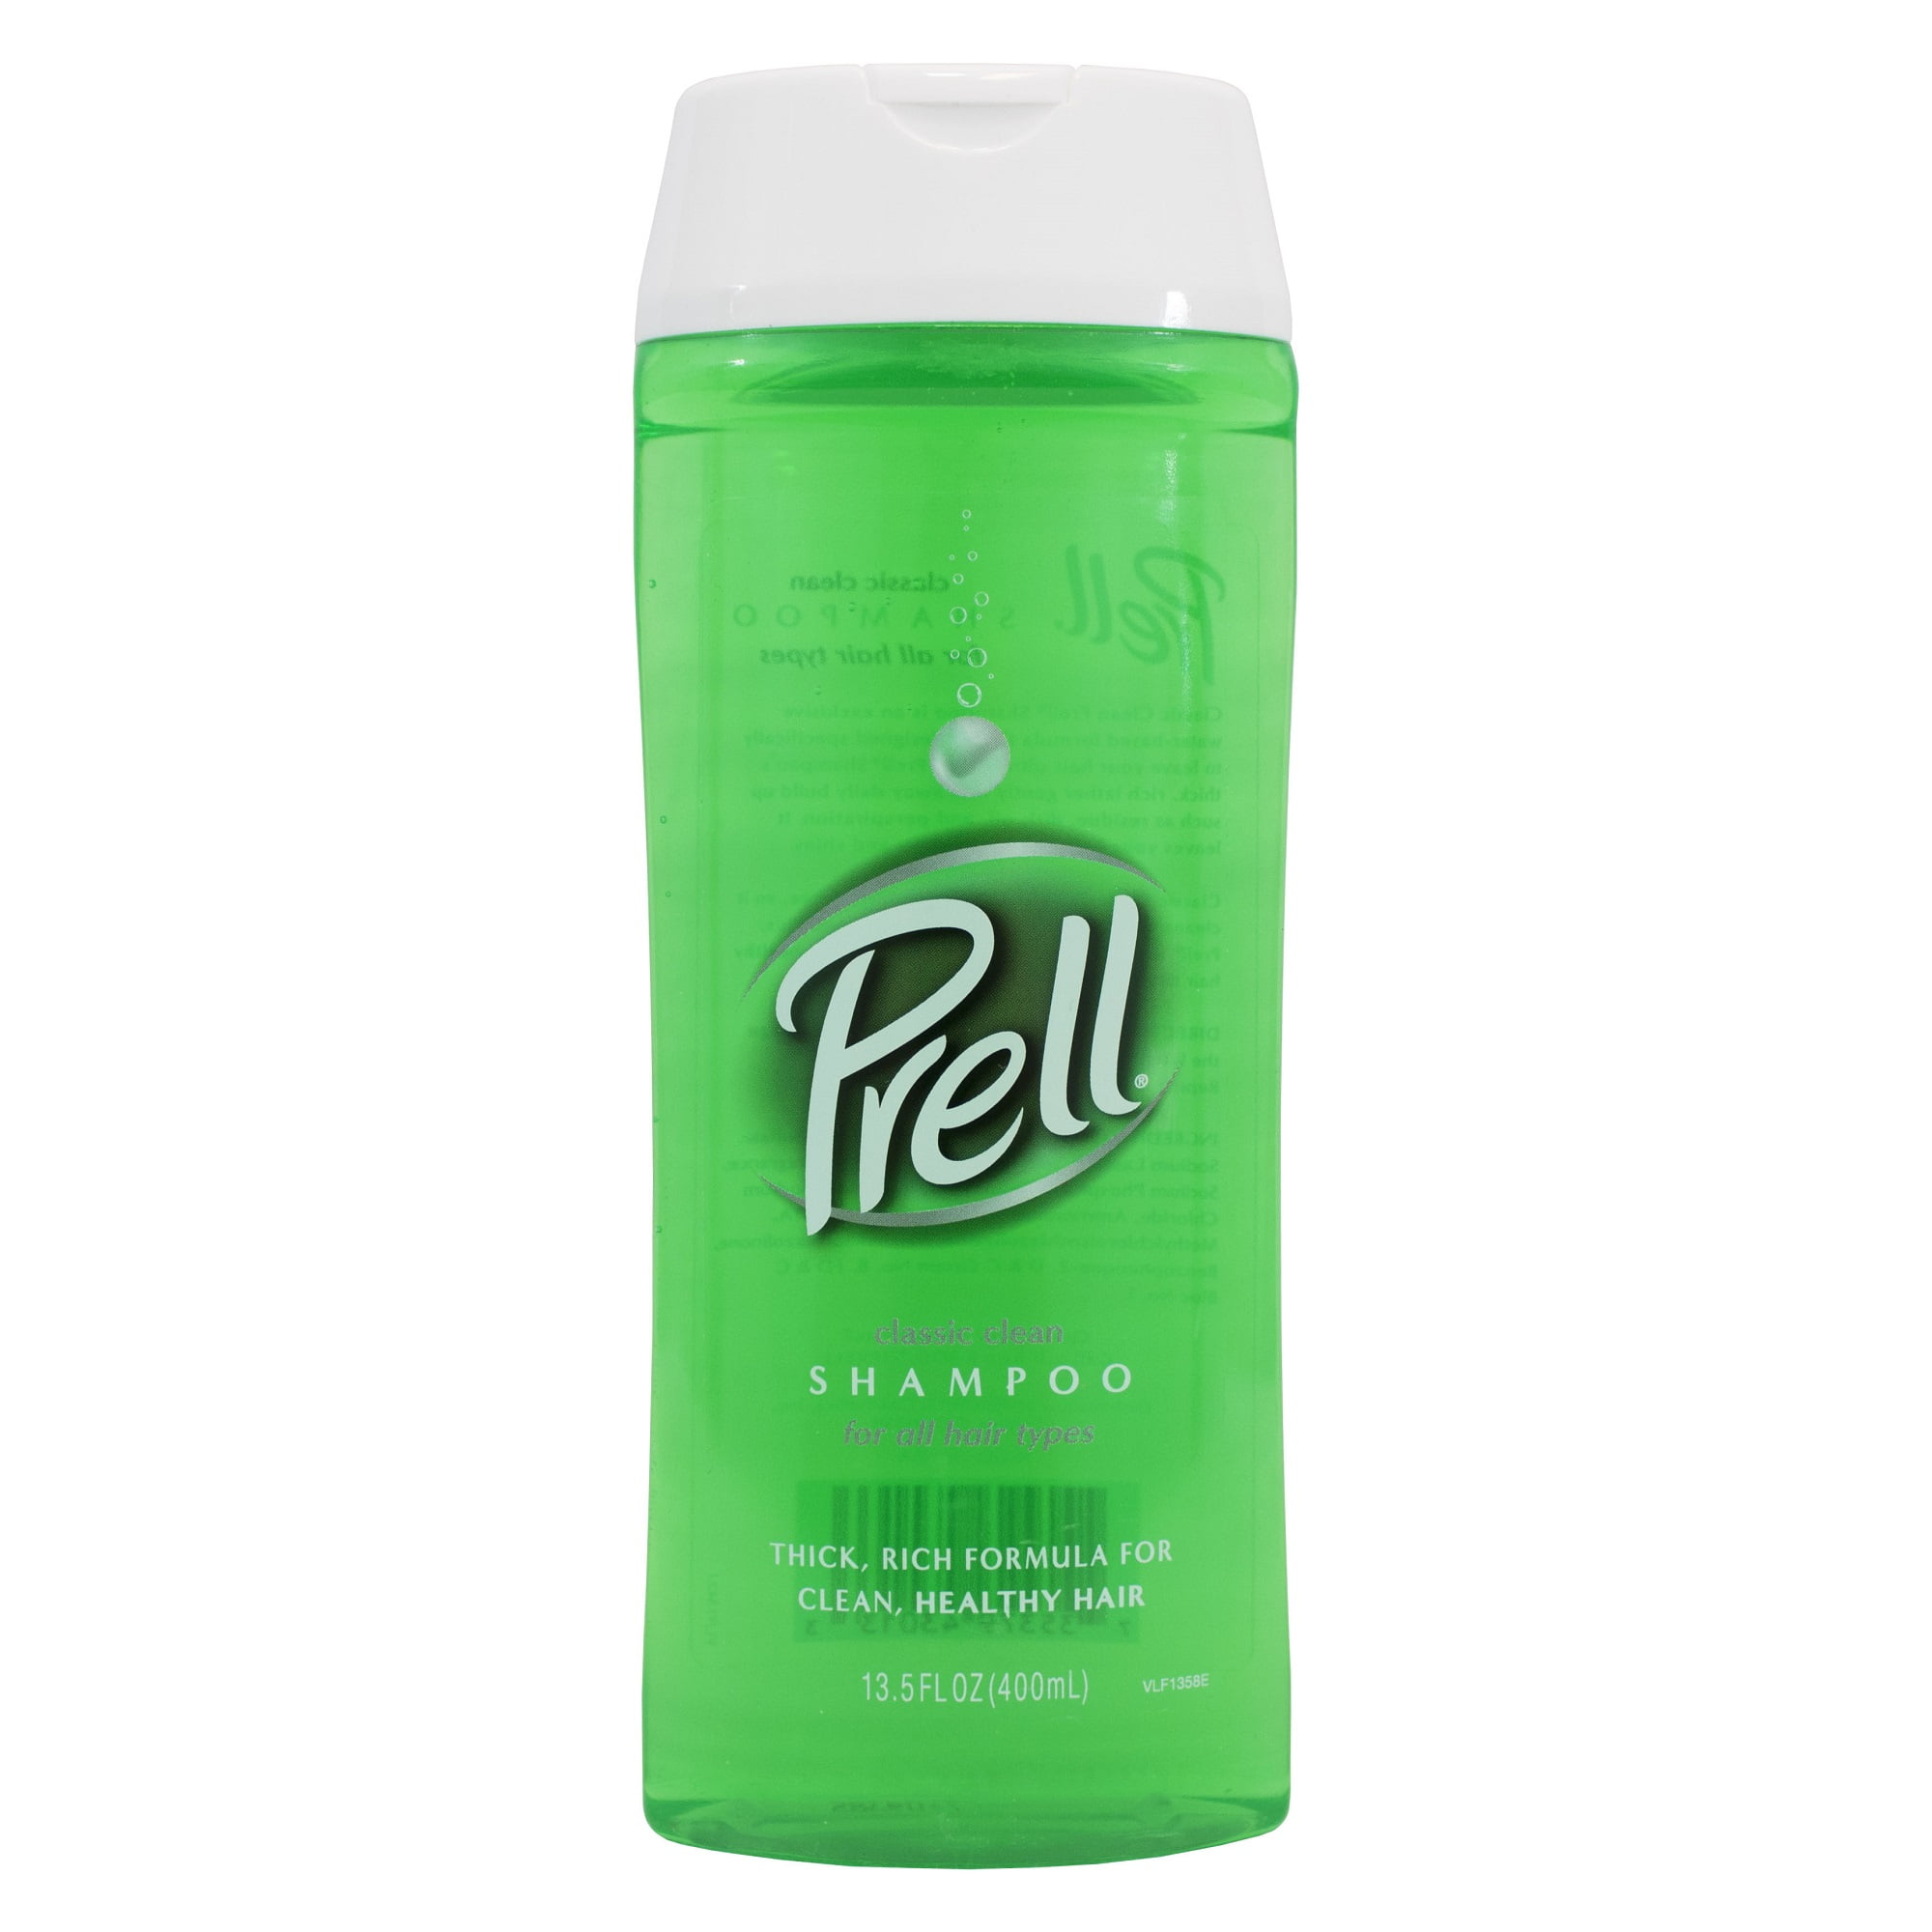 Prell Classic Clean Clarifying Shine Enhancing Daily Shampoo, 13.5 fl oz